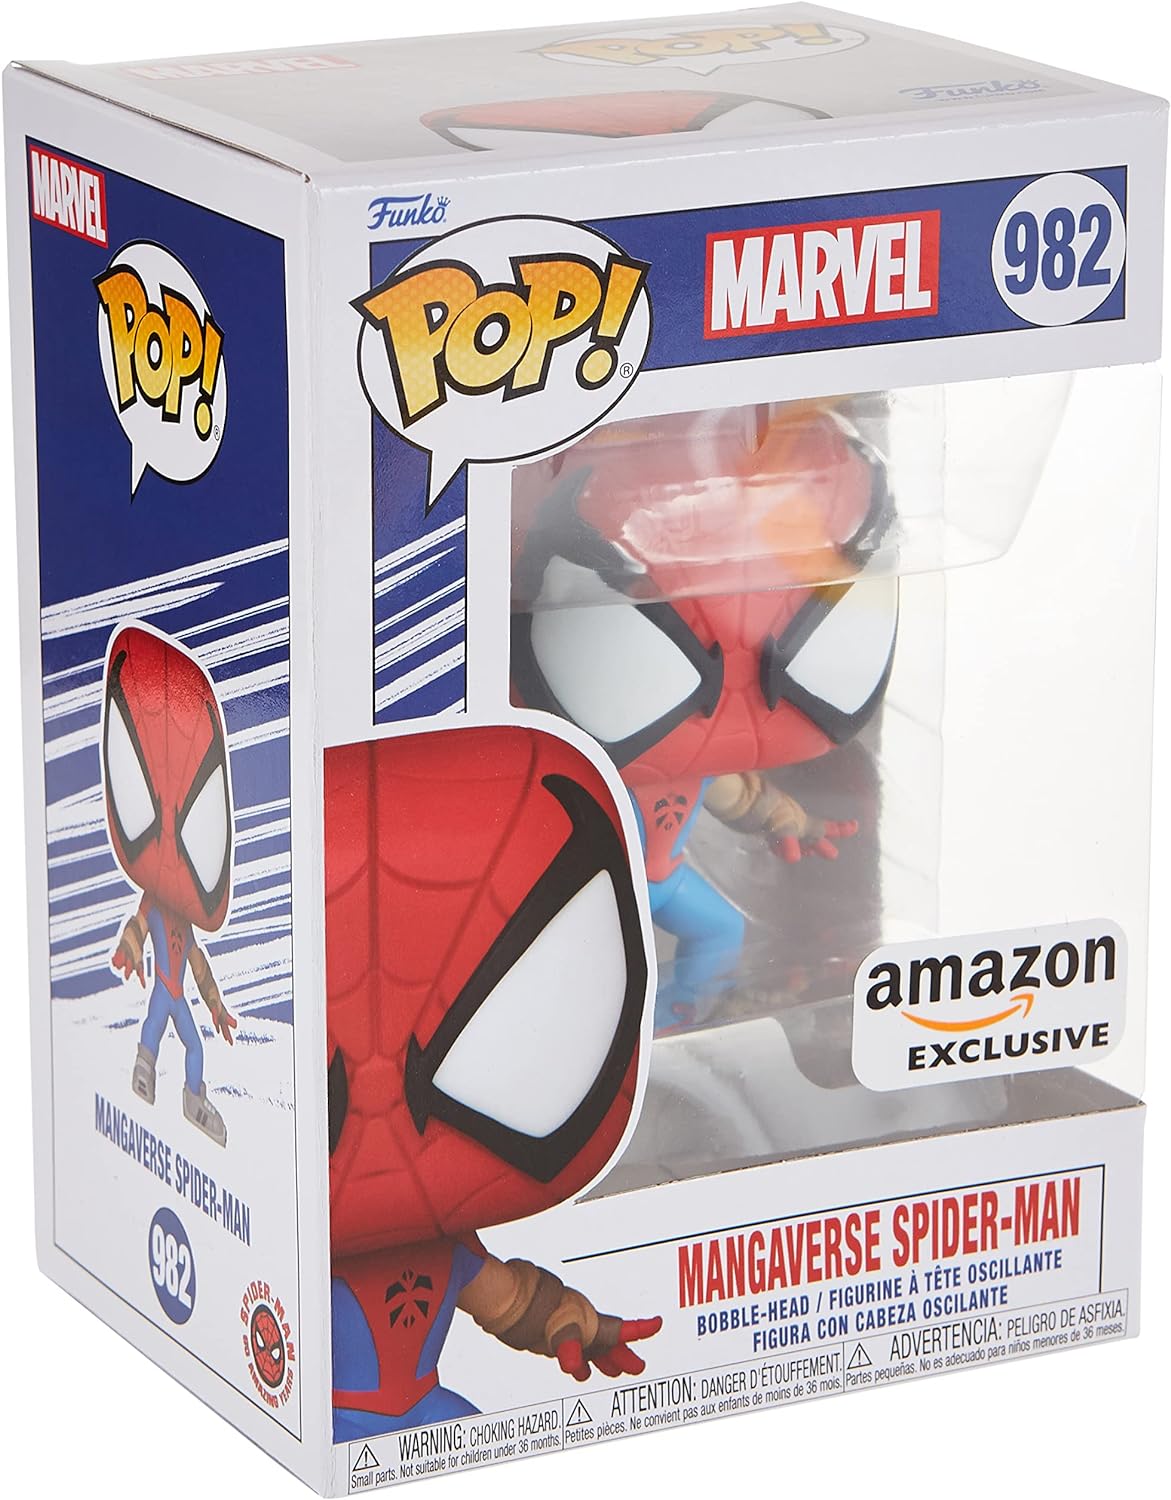 Funko Mangaverse Spider-Man Amazon Exclusive 982 (Marvel)